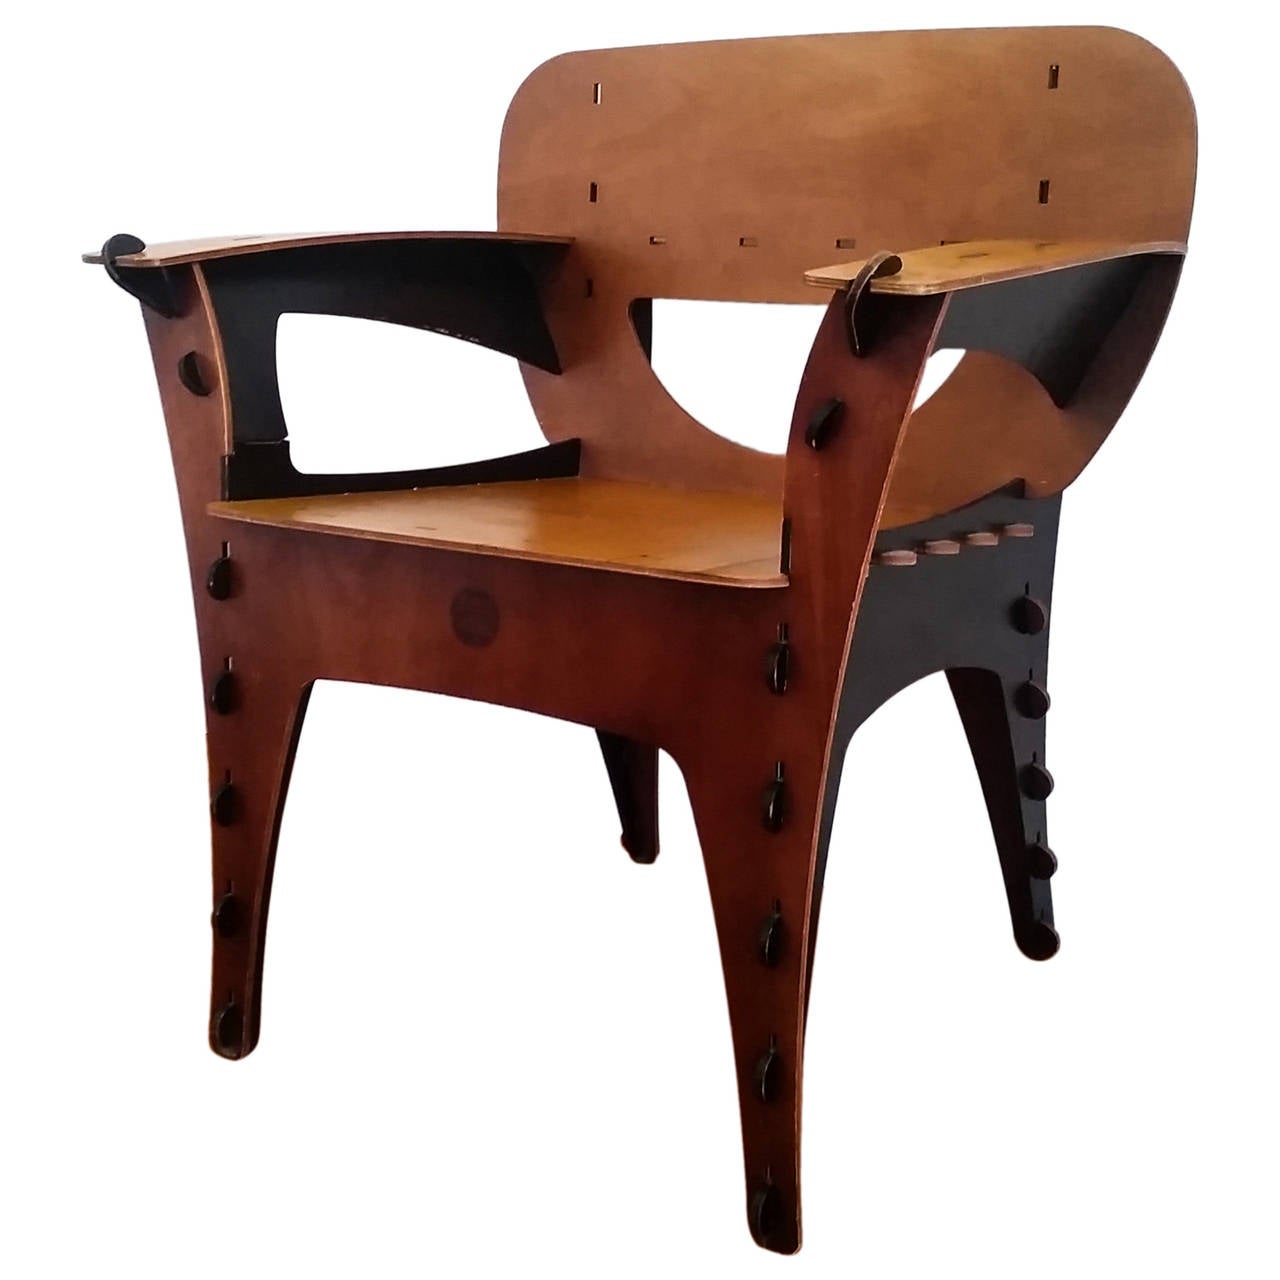 David Kawecki Modern Puzzle Chair For Sale at 1stdibs